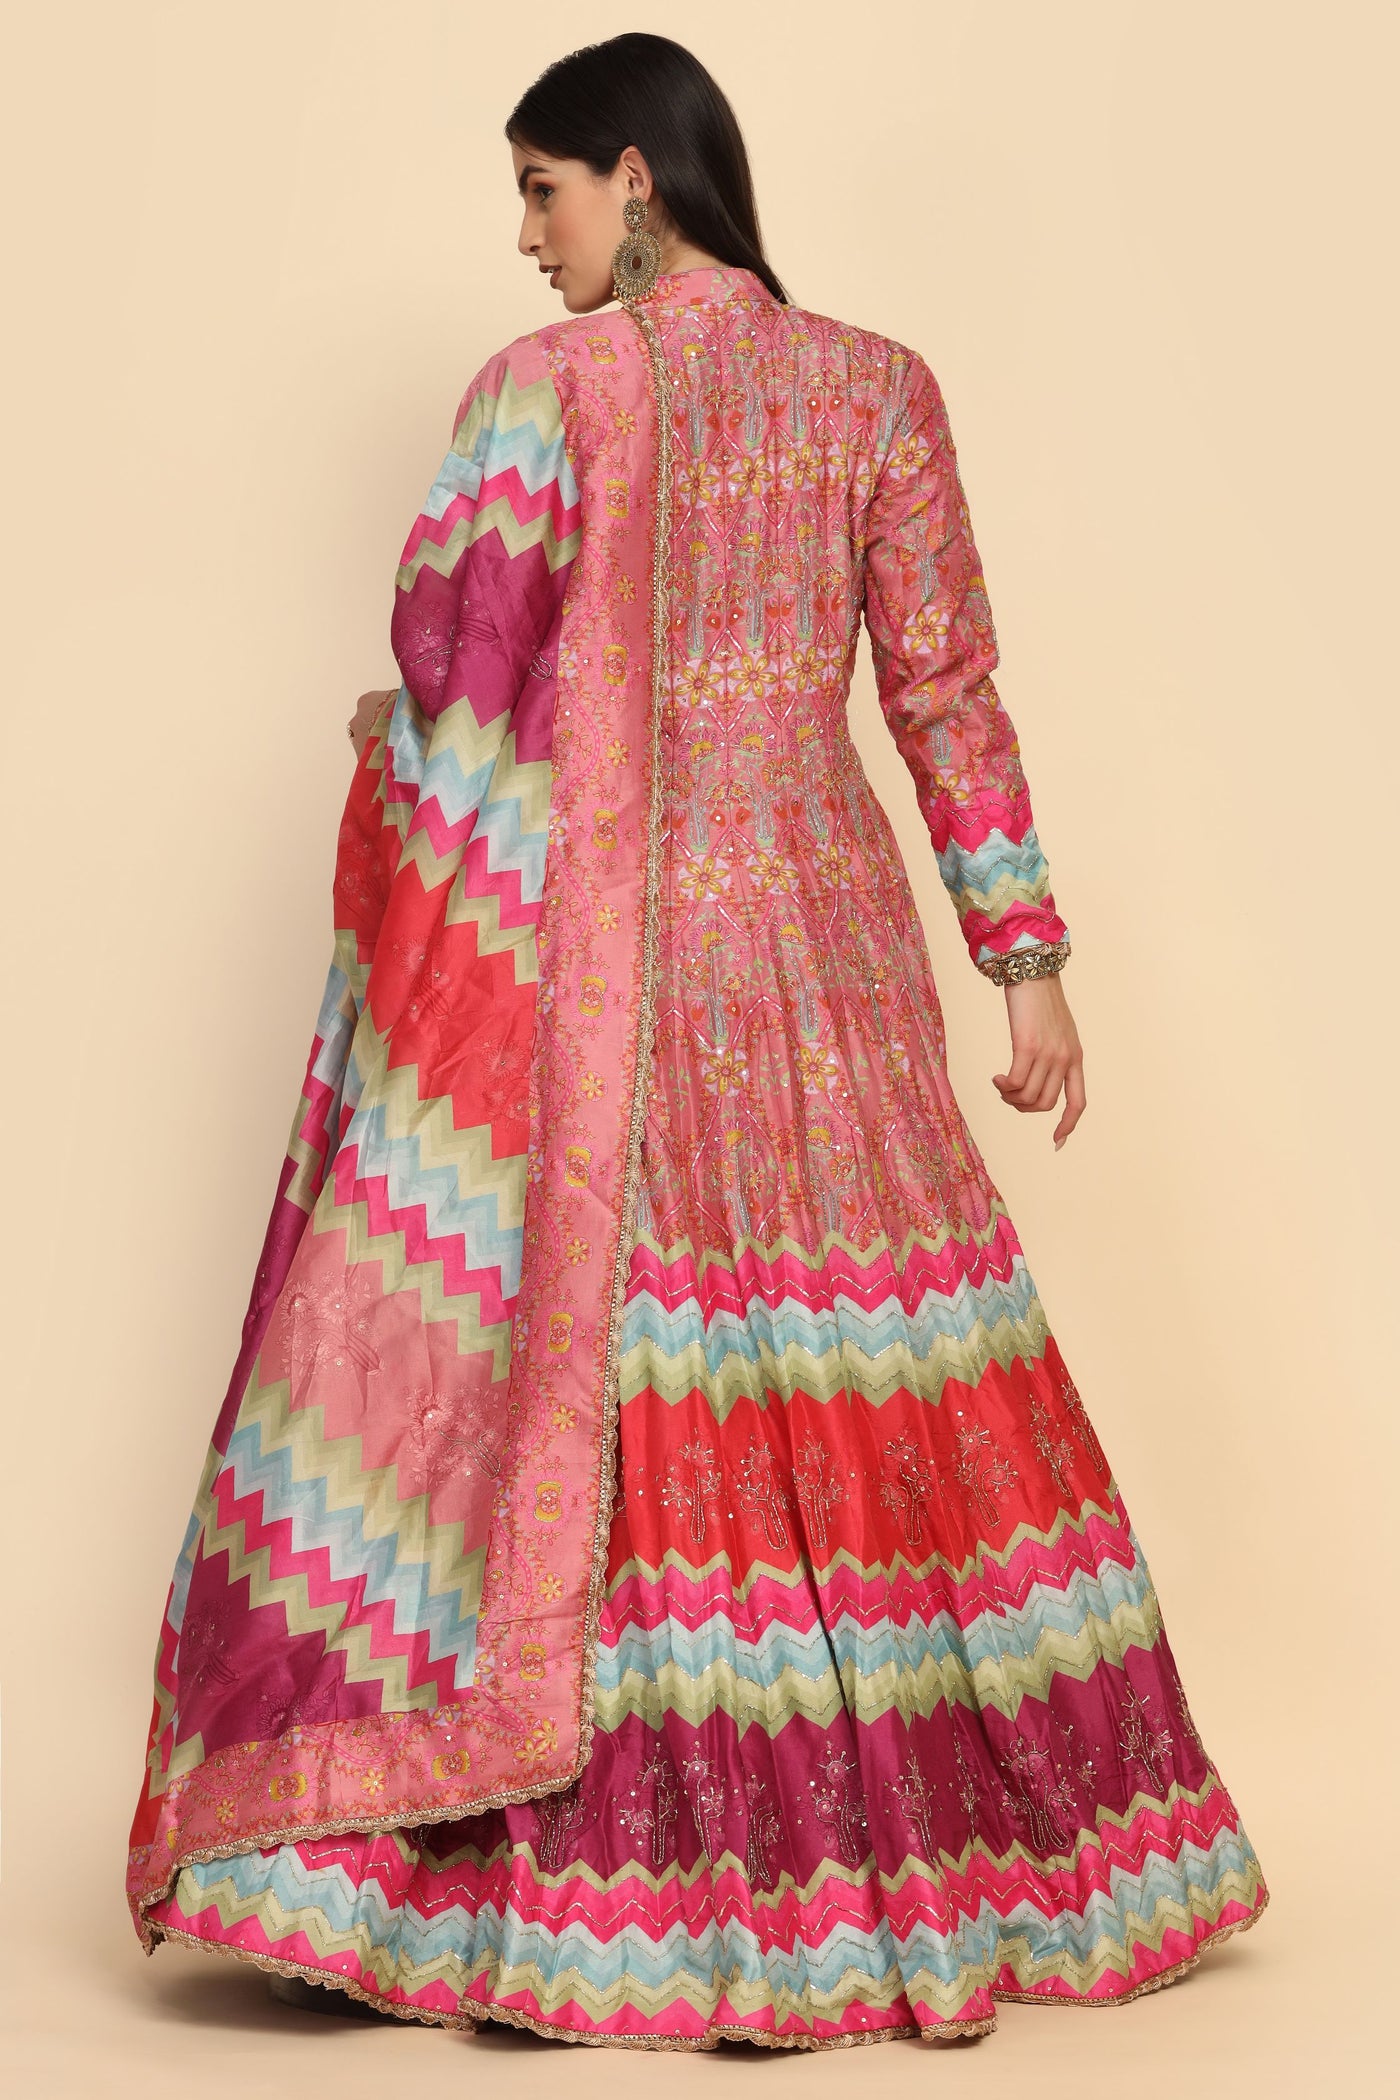 Adorable multi color floral motif embroidered dress